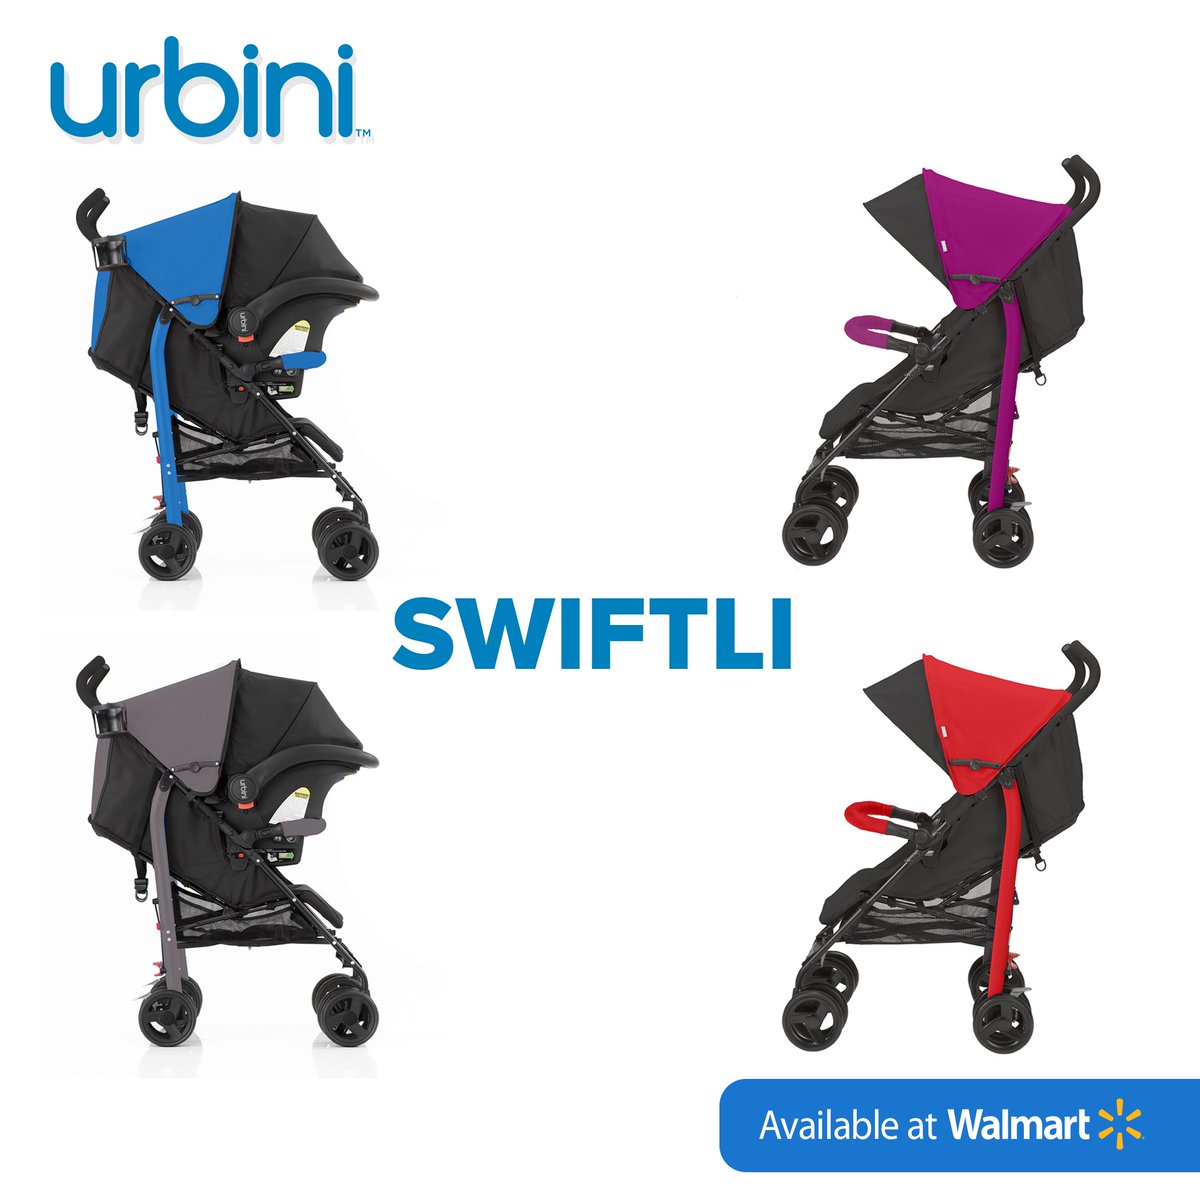 urbini swiftli lightweight stroller